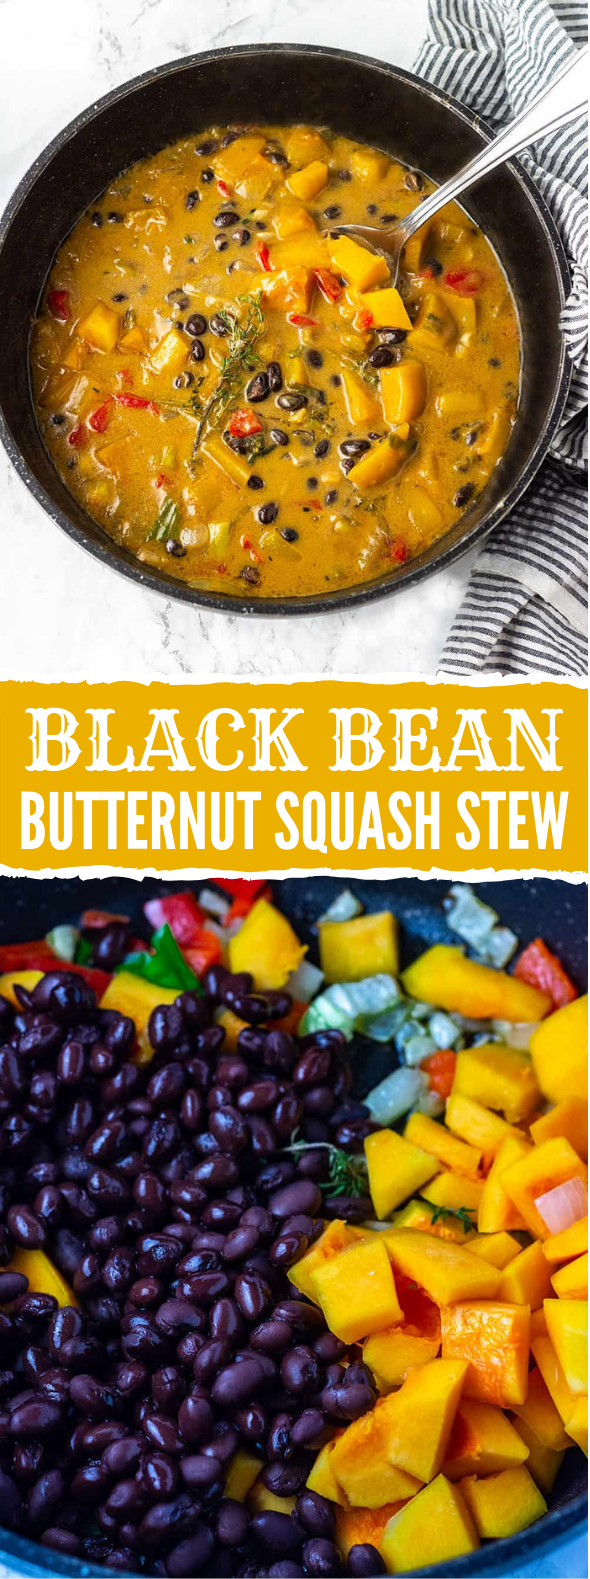 Black Bean Butternut Squash Stew #vegan #healthy